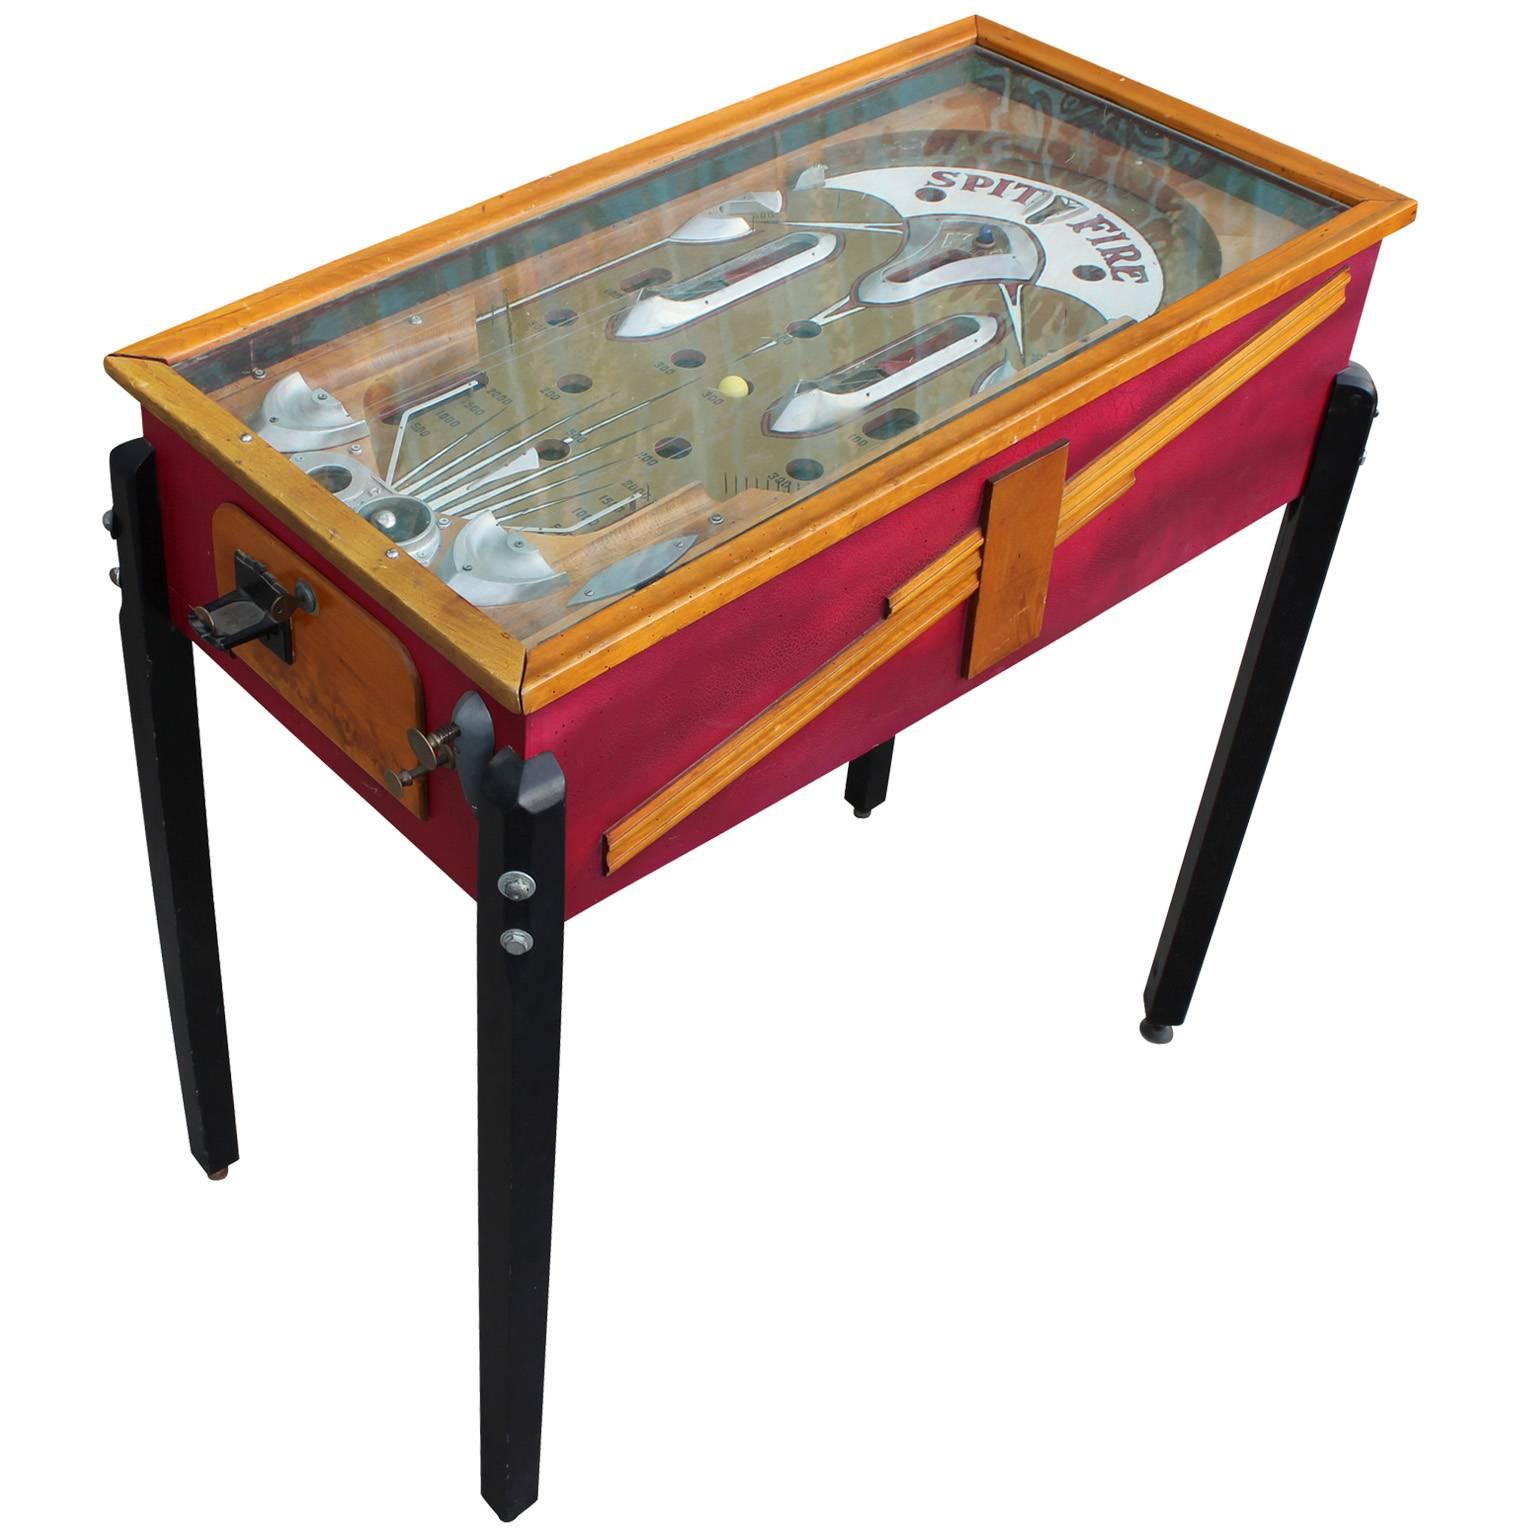 Genco "Spit Fire" Art Deco Pinball Machine